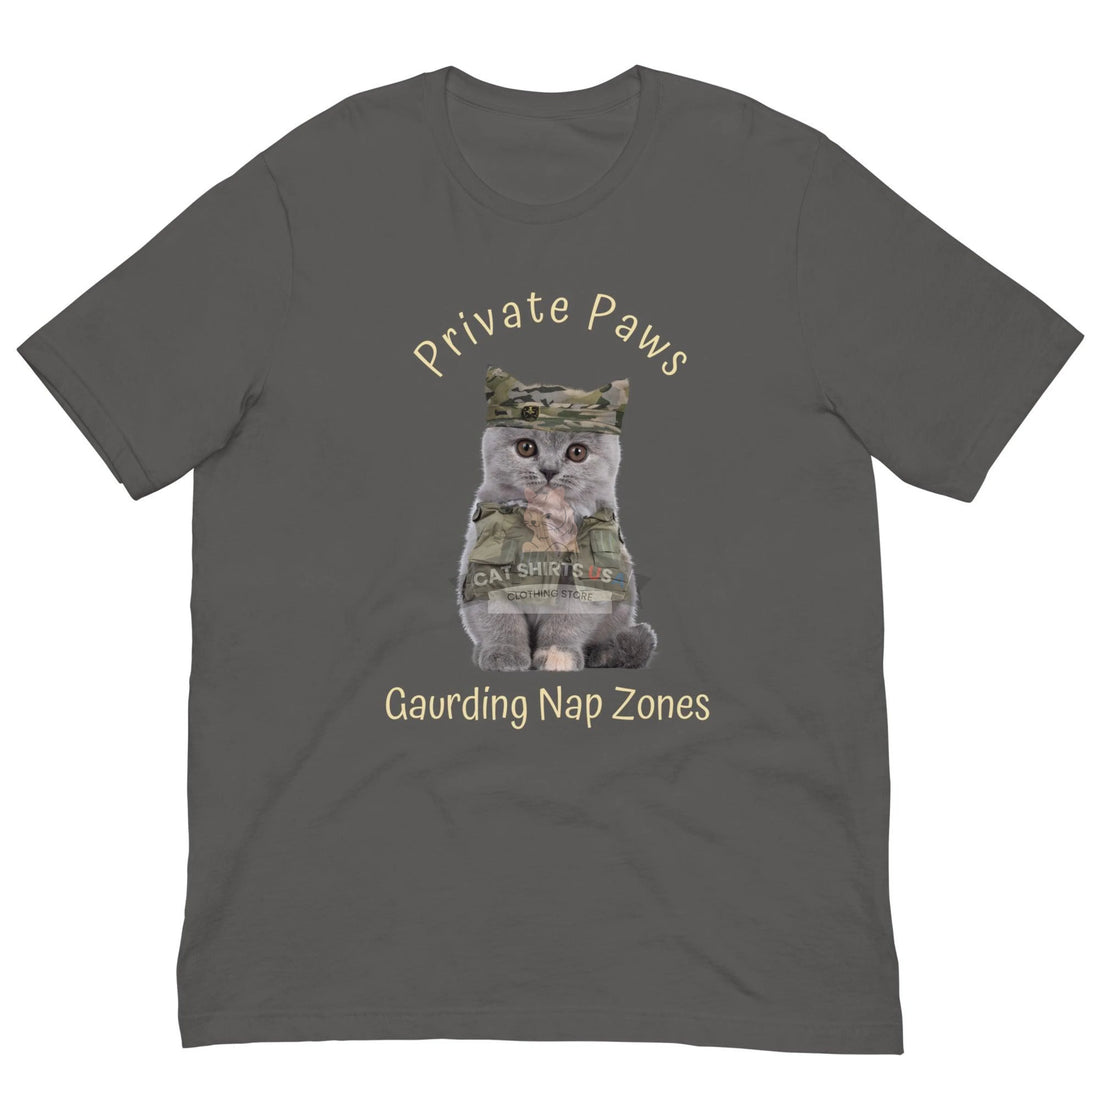 Private Paws Cat Shirt - Cat Shirts USA